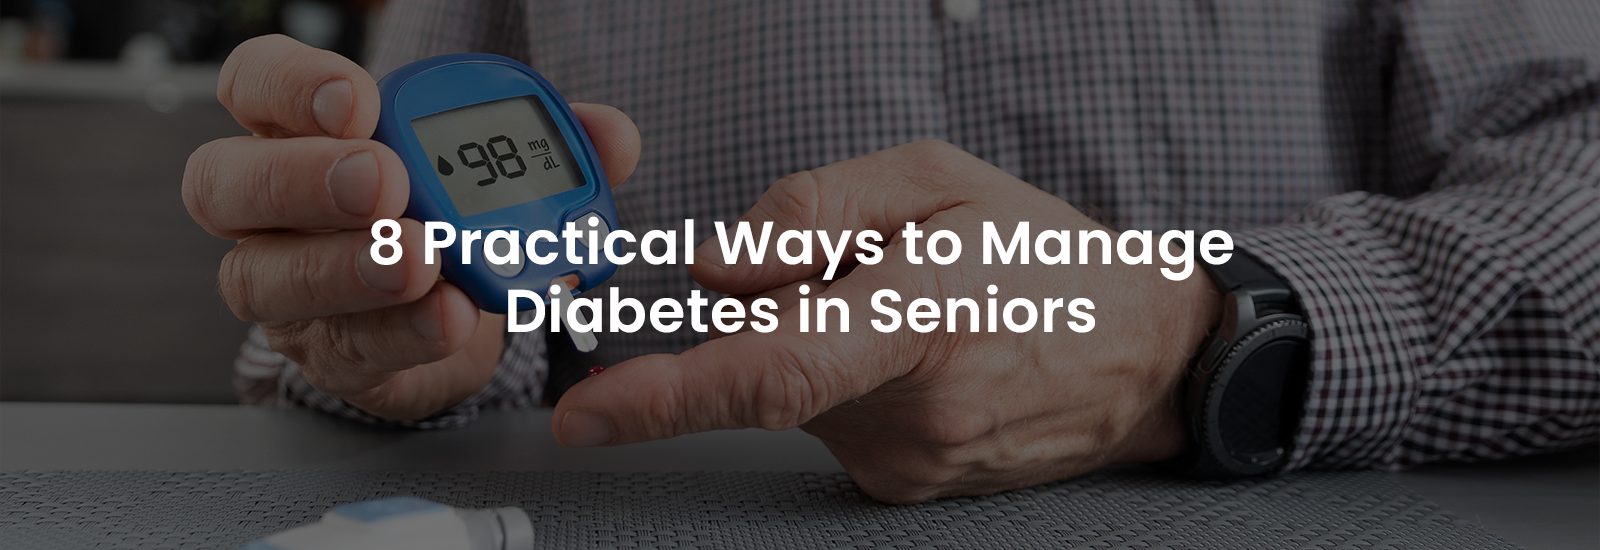 8 Practical Ways to Manage Diabetes in Seniors | Banner Image